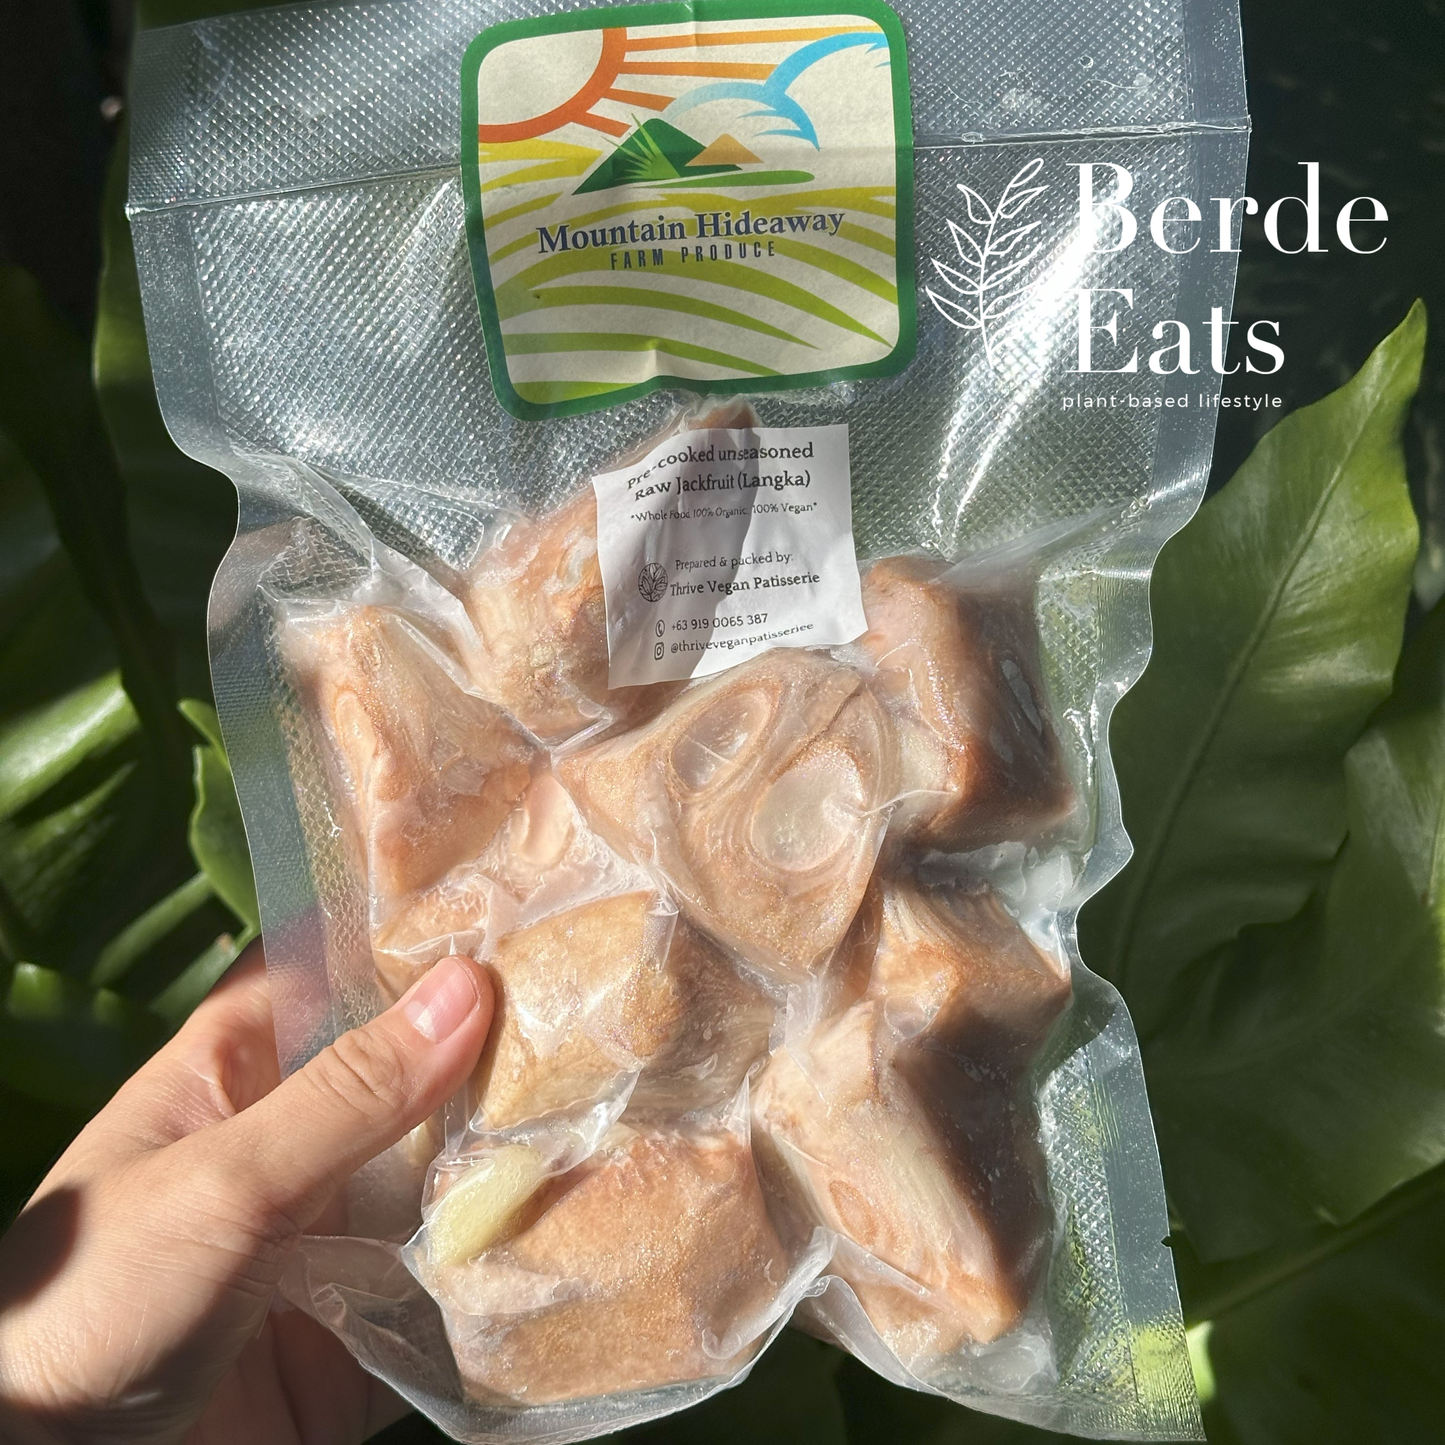 Pre-Cooked Organic Unripe Jackfruit (Langka) WFPB Meat Alternative